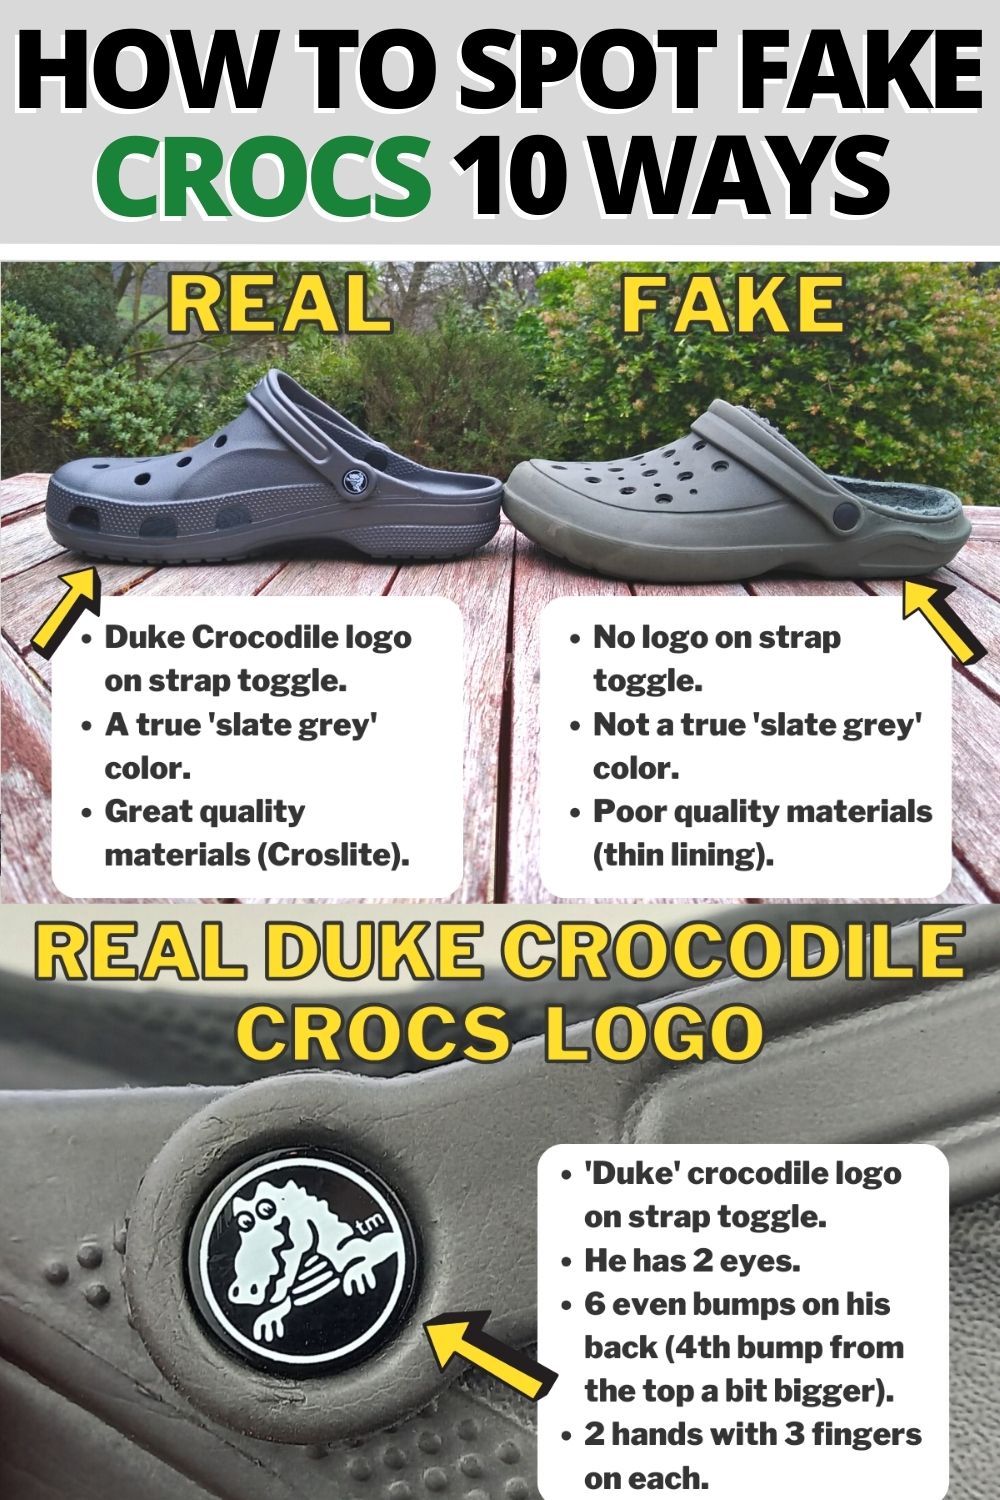 How to spot fake crocs